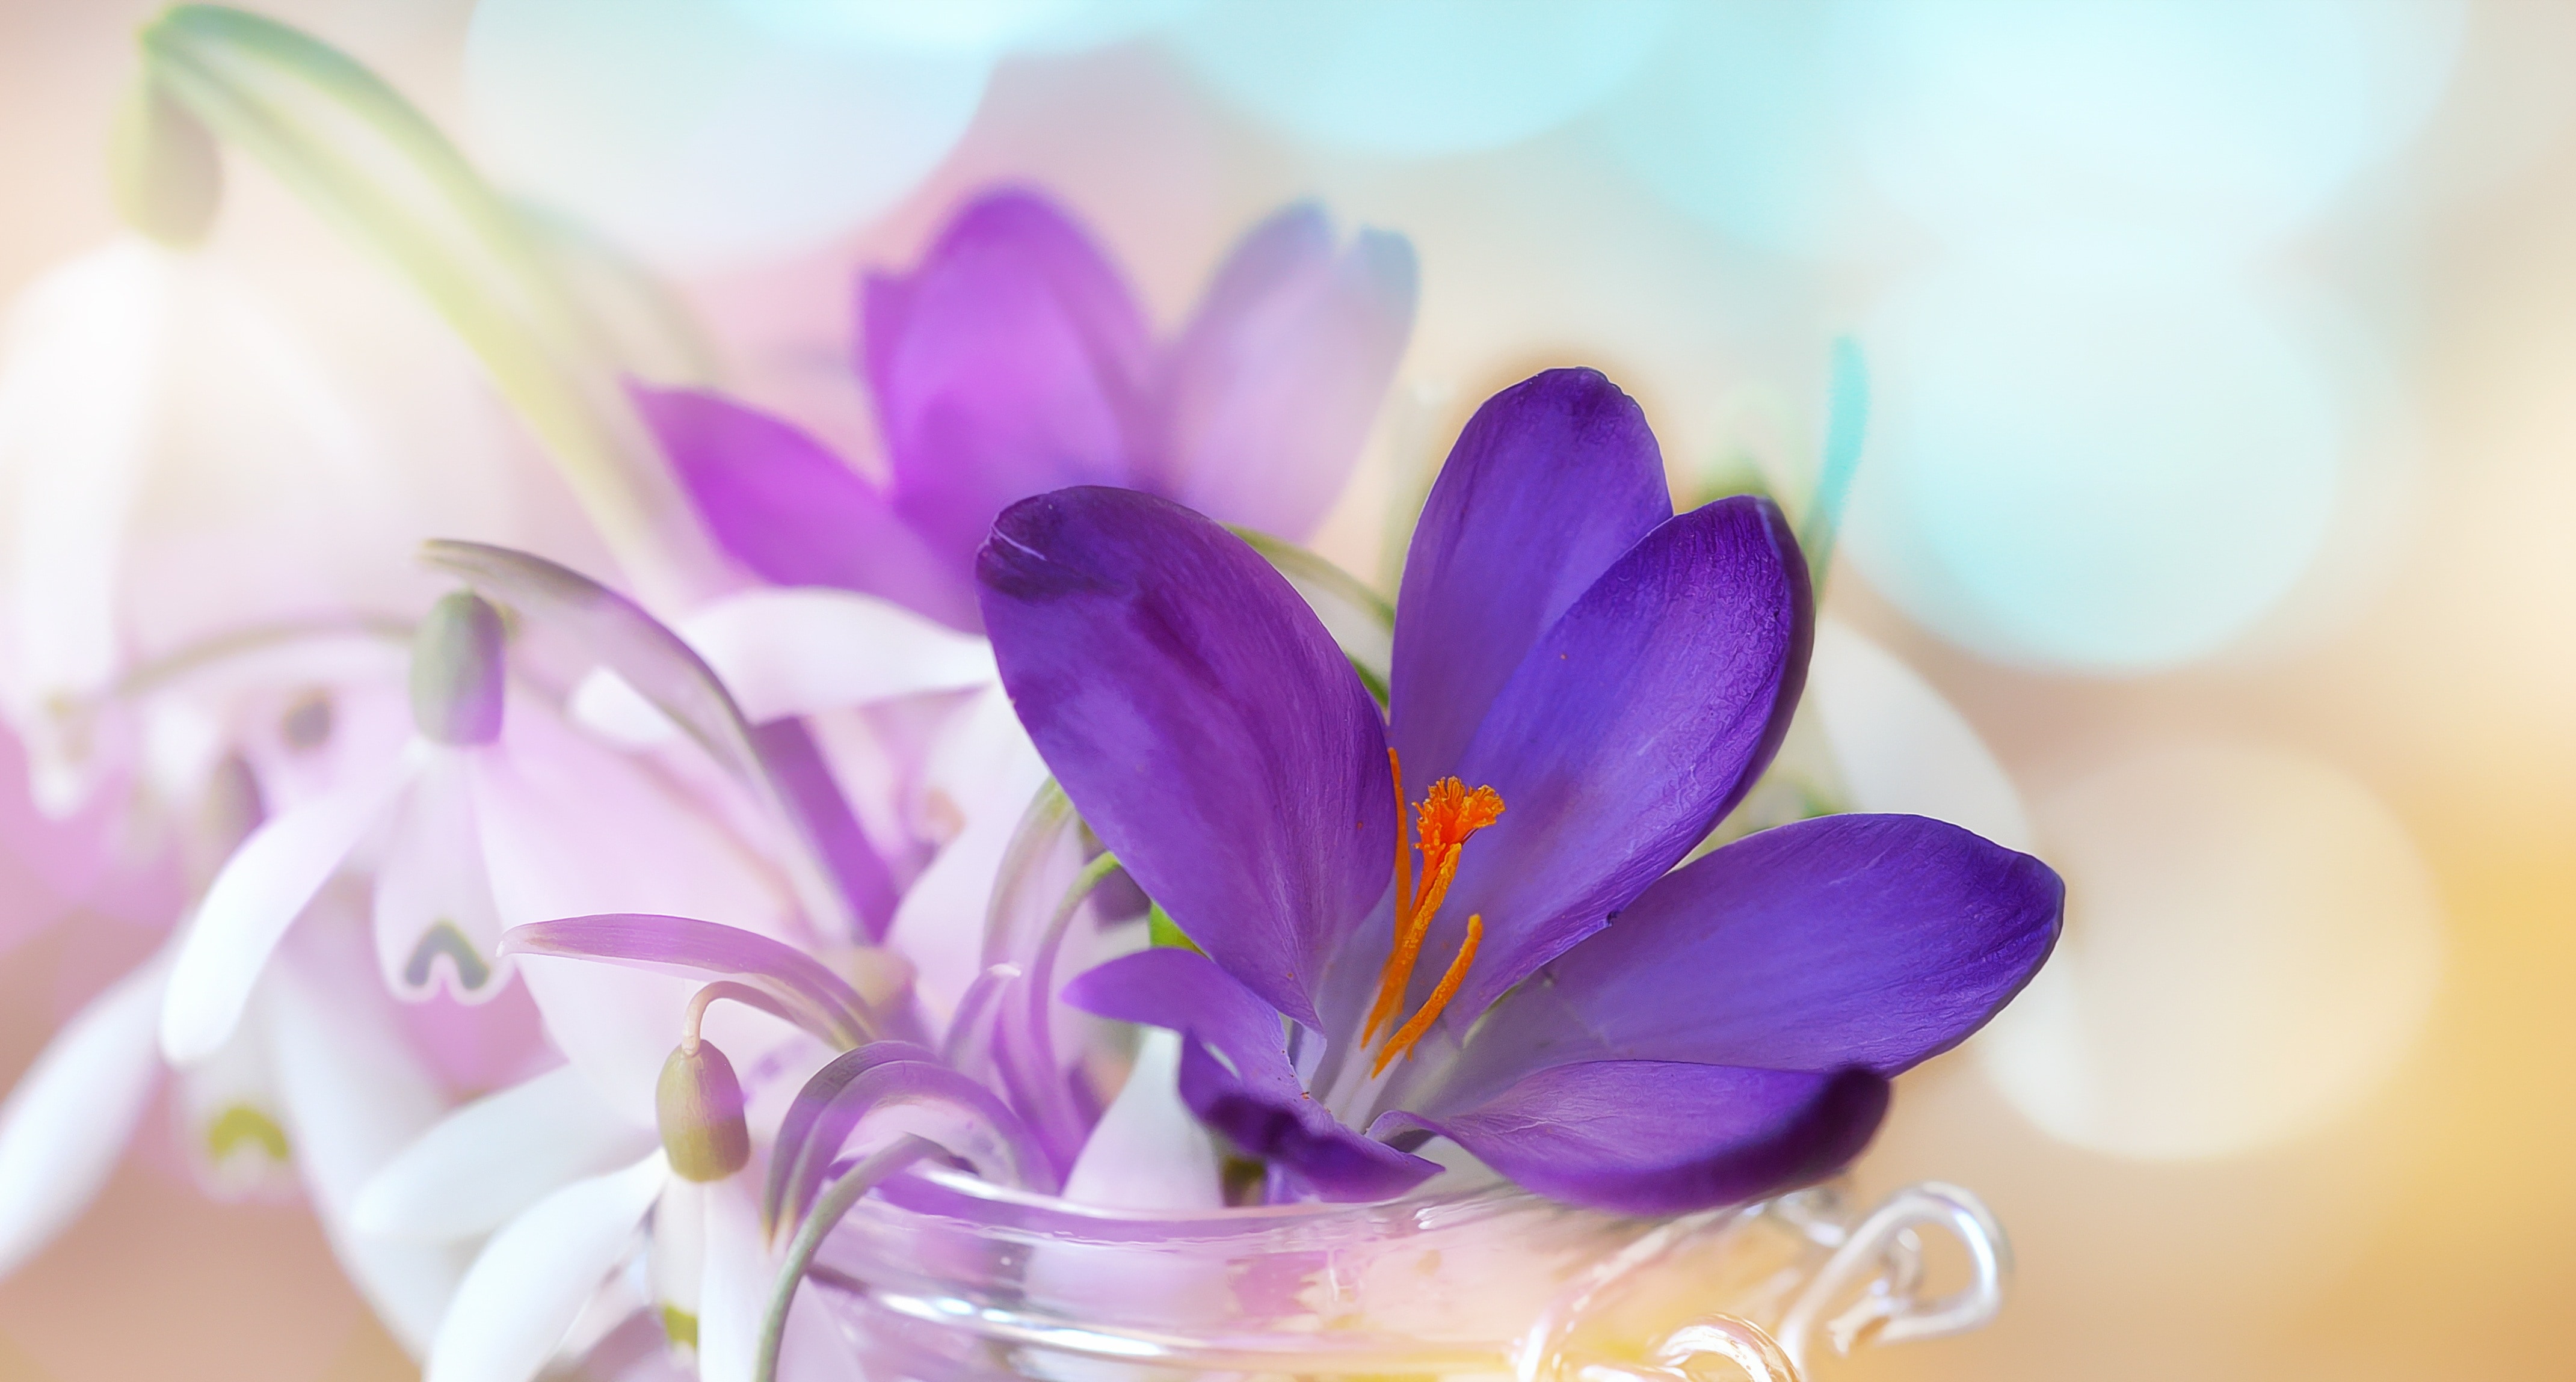 Crocus, Snowdrop, Lily Of The Valley, flower, purple